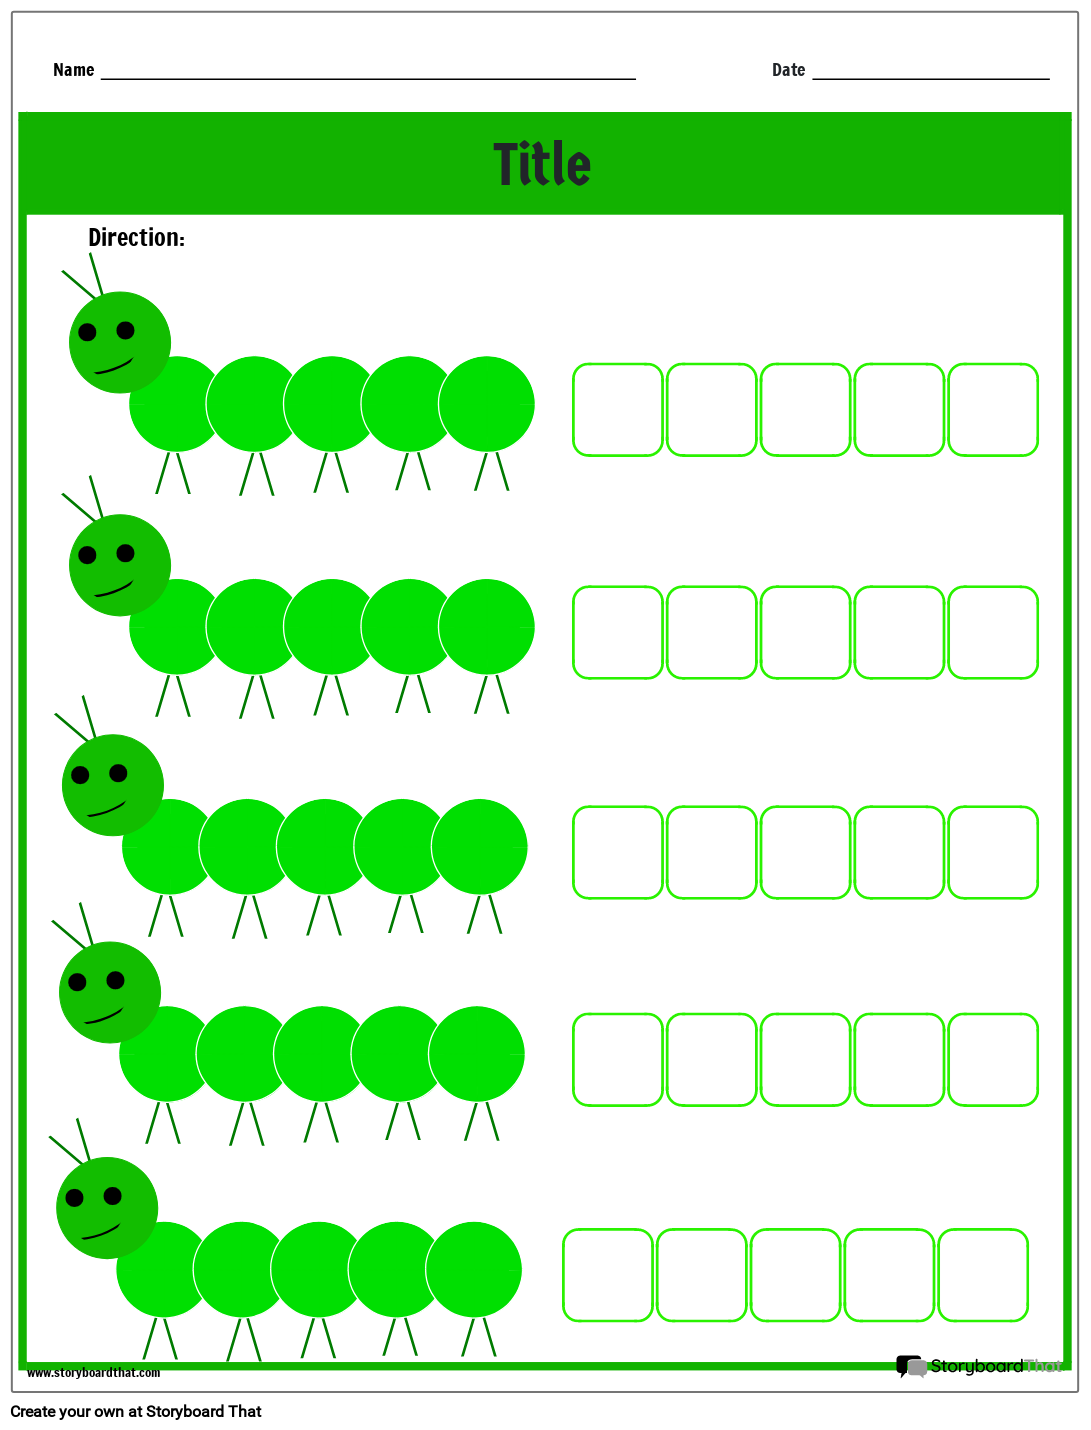 Caterpillar-themed Ordering Numbers Worksheet